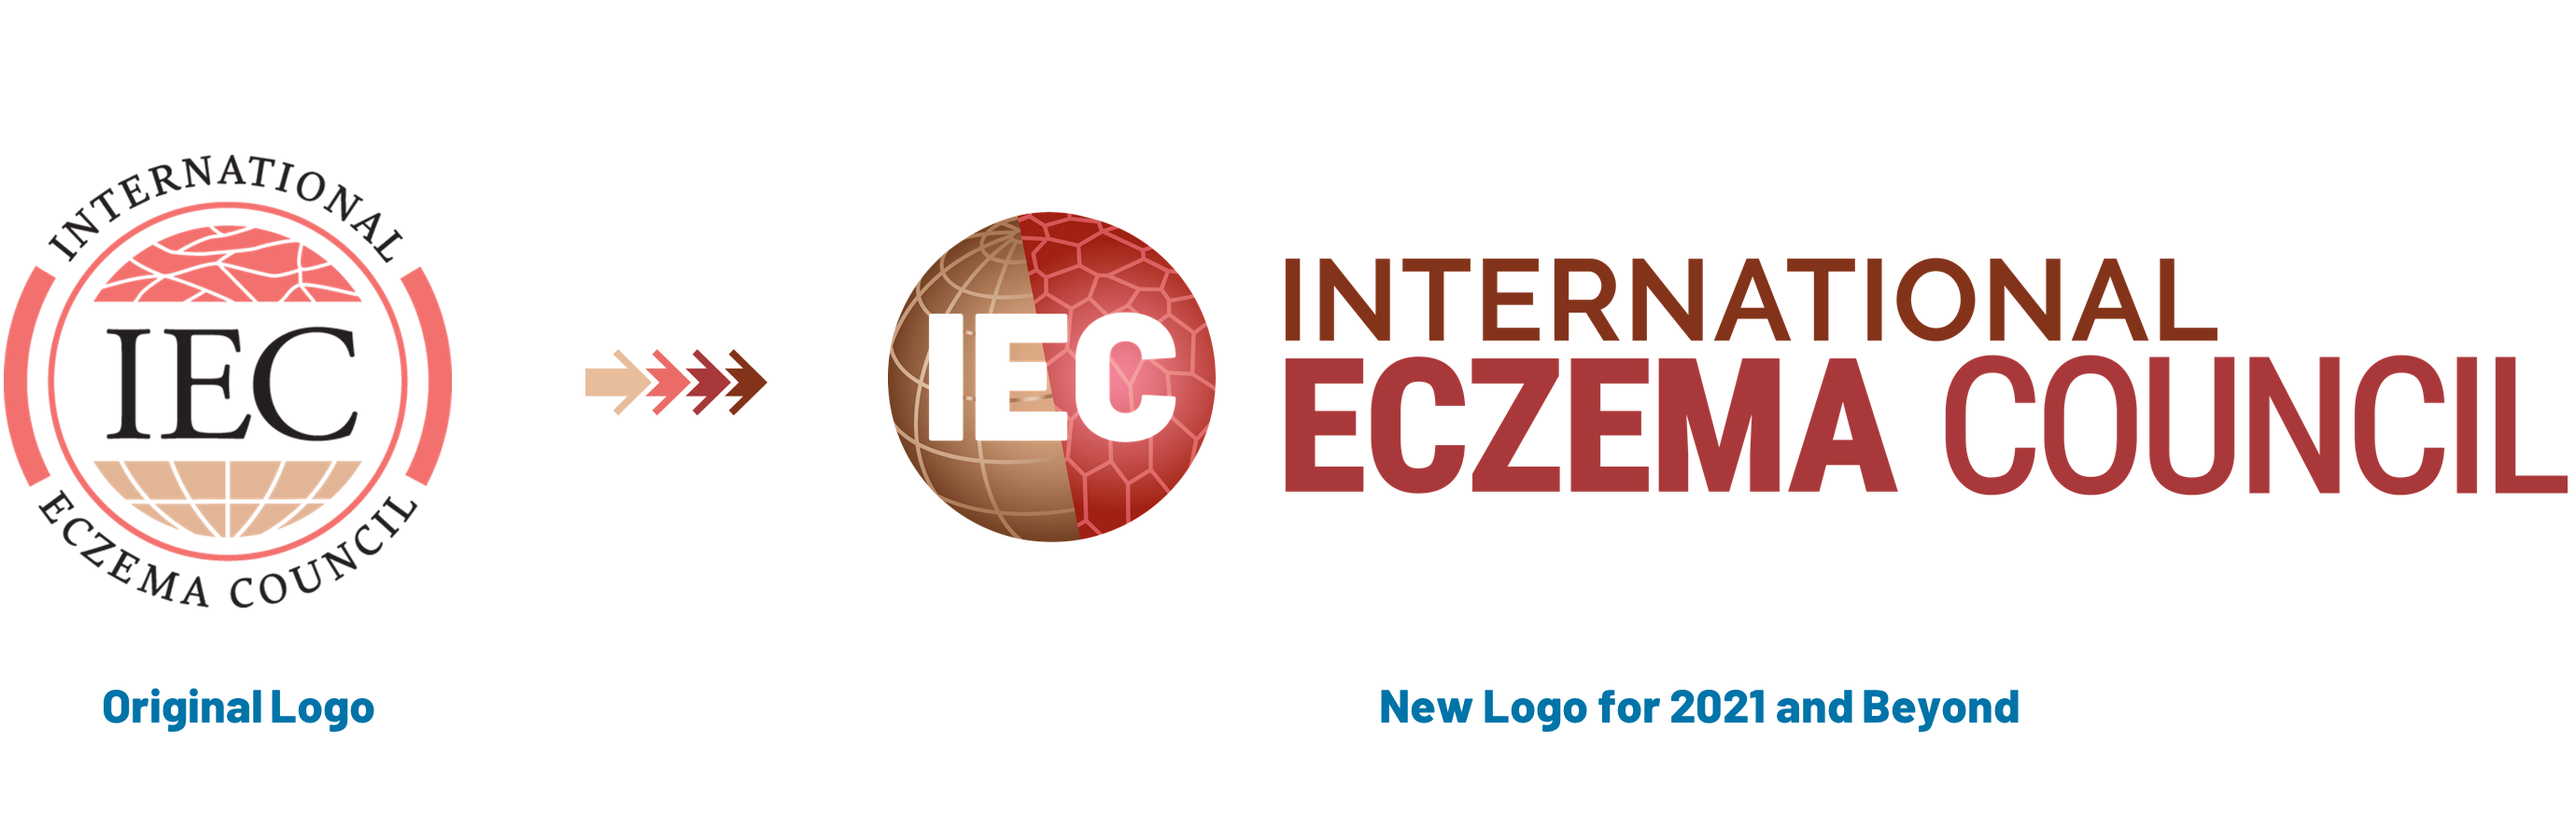 Iec Membership Program, Electrician Contracting Membership | Lubbock, TX |  Lubbock Chapter IEC